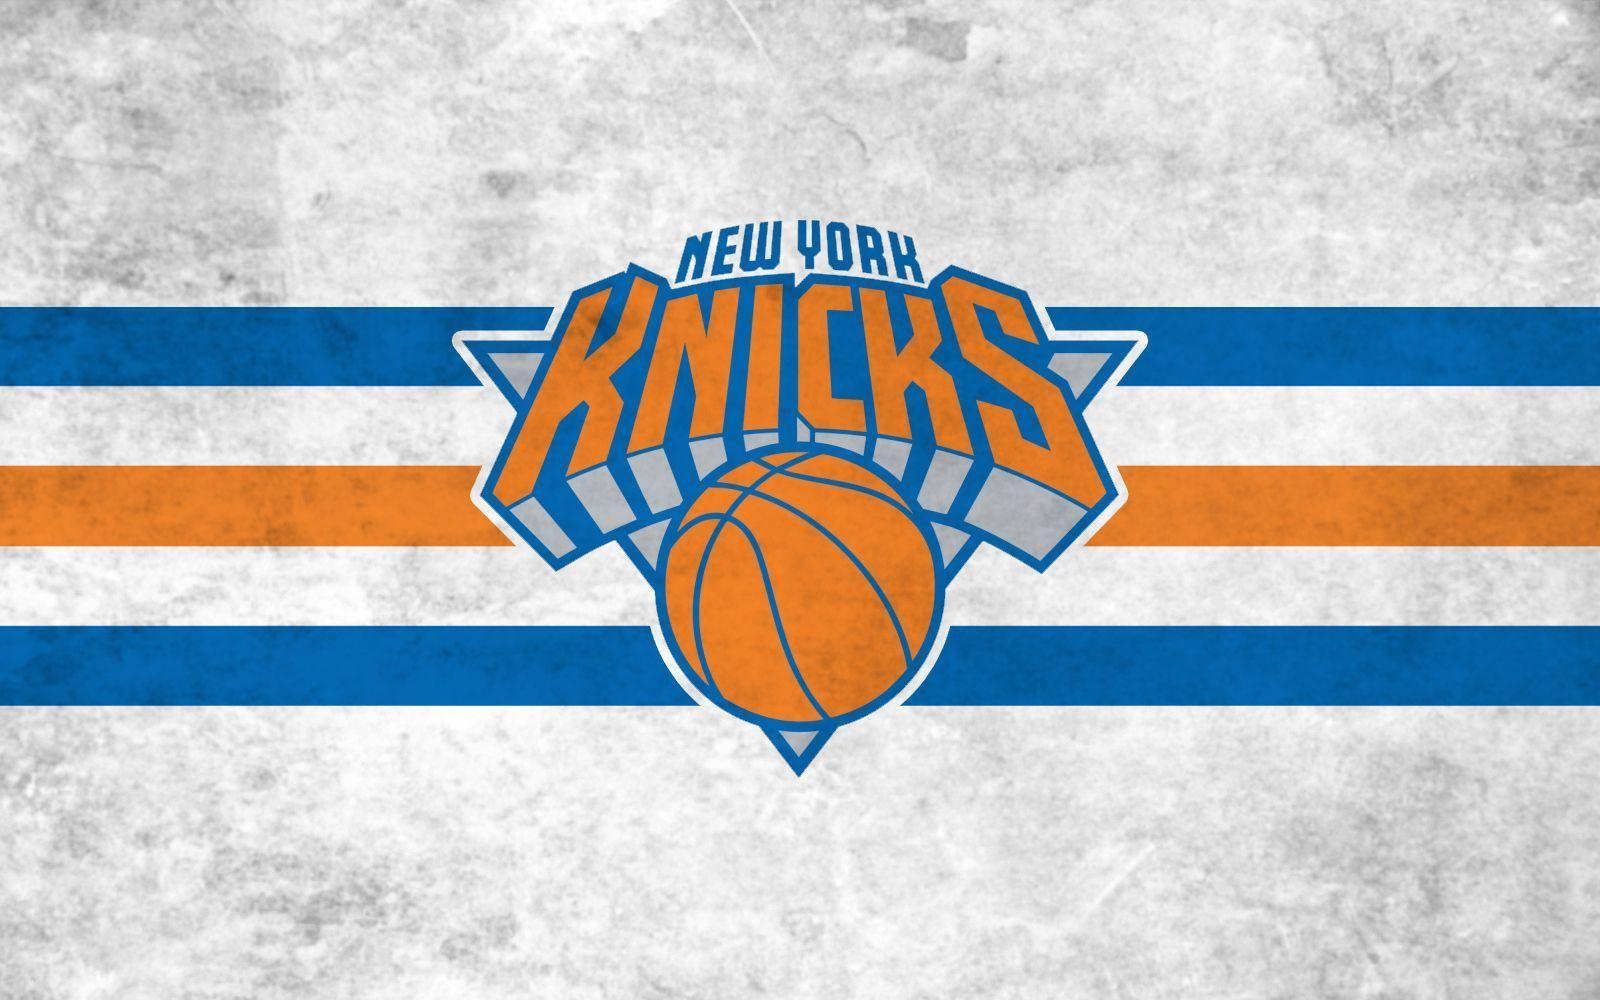 New York Knicks scores